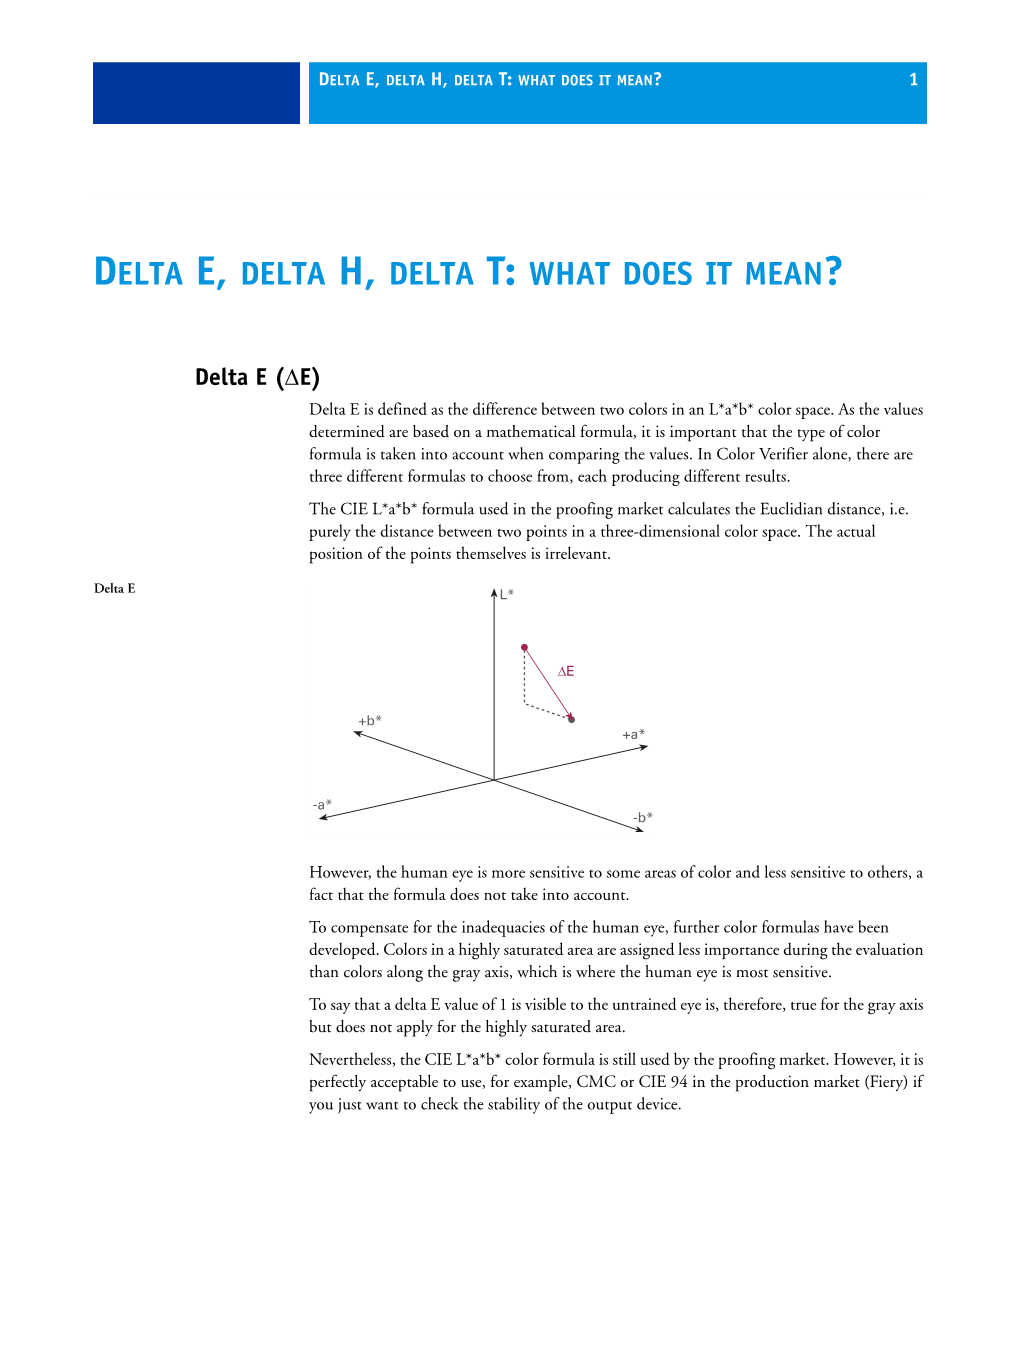 Delta E, Delta H, Delta T: What Does It Mean?1